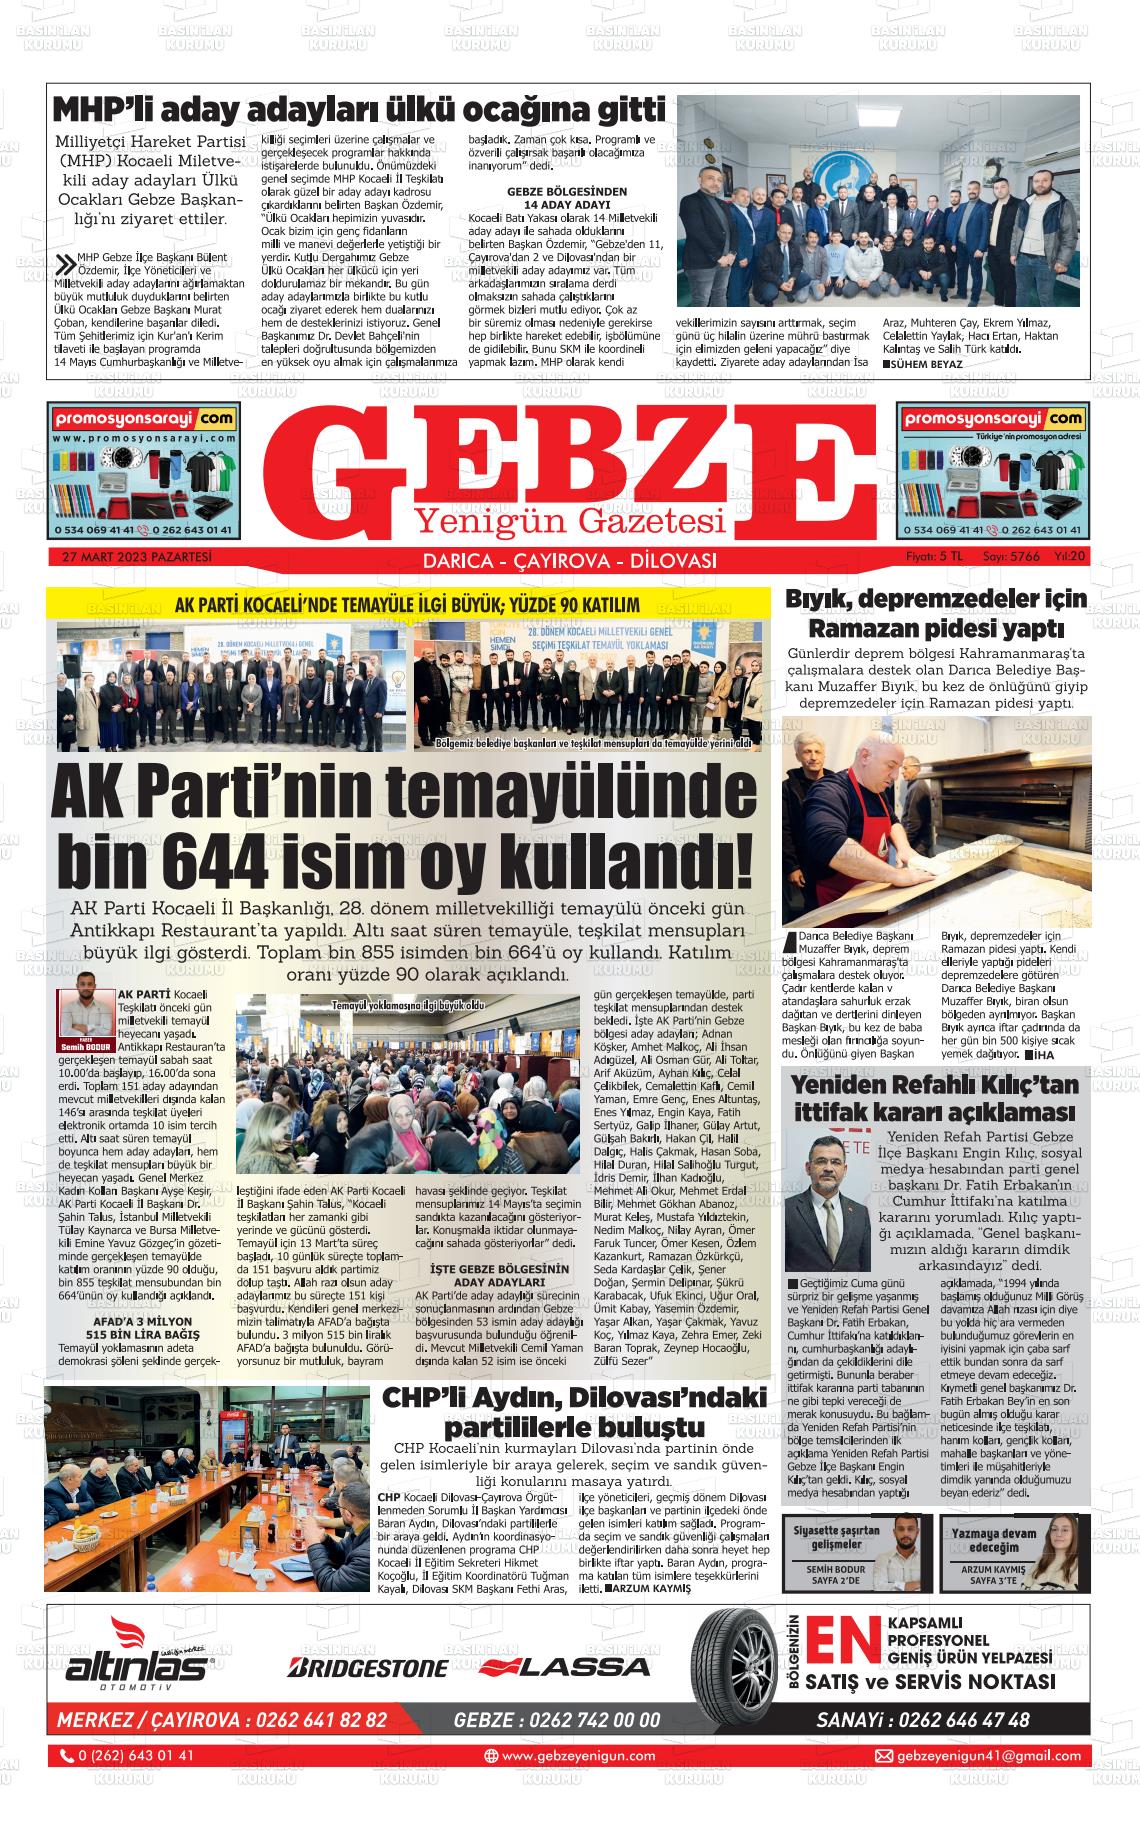 27 Mart 2023 Gebze Yenigün Gazete Manşeti